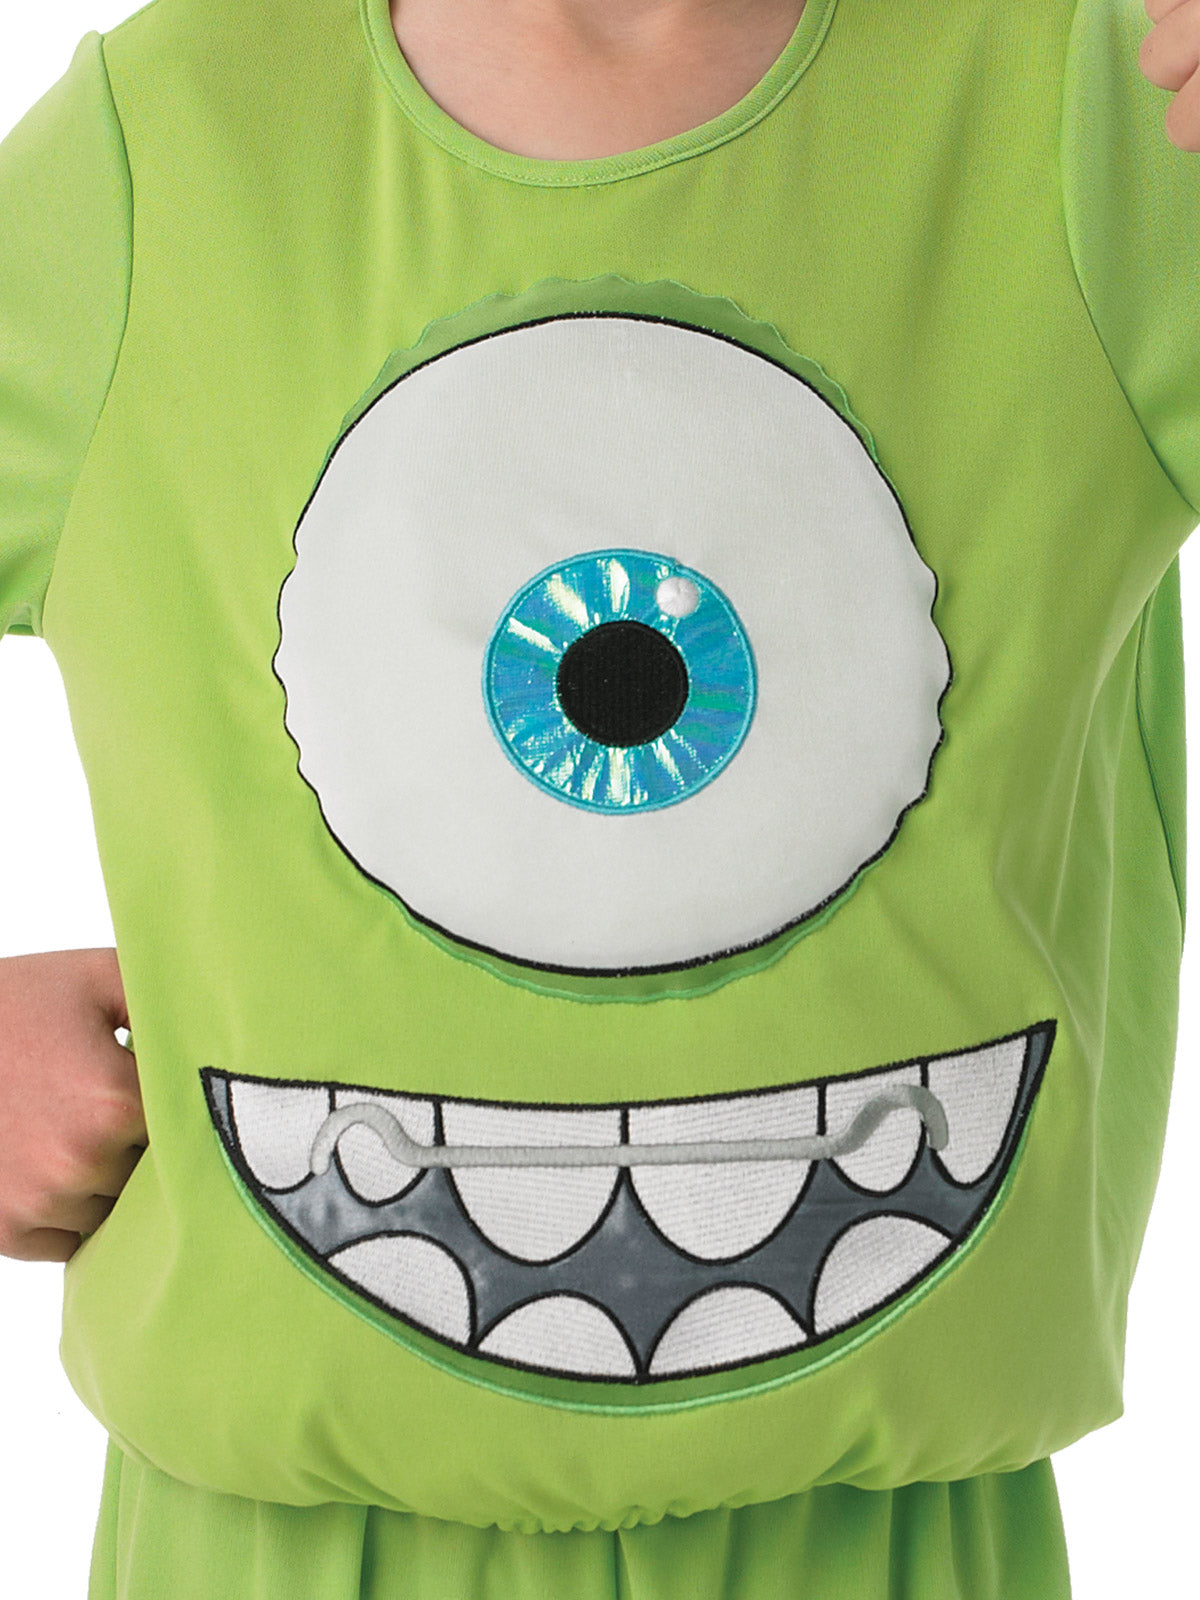 Monsters Inc. Mike Wazowski Kids Costume